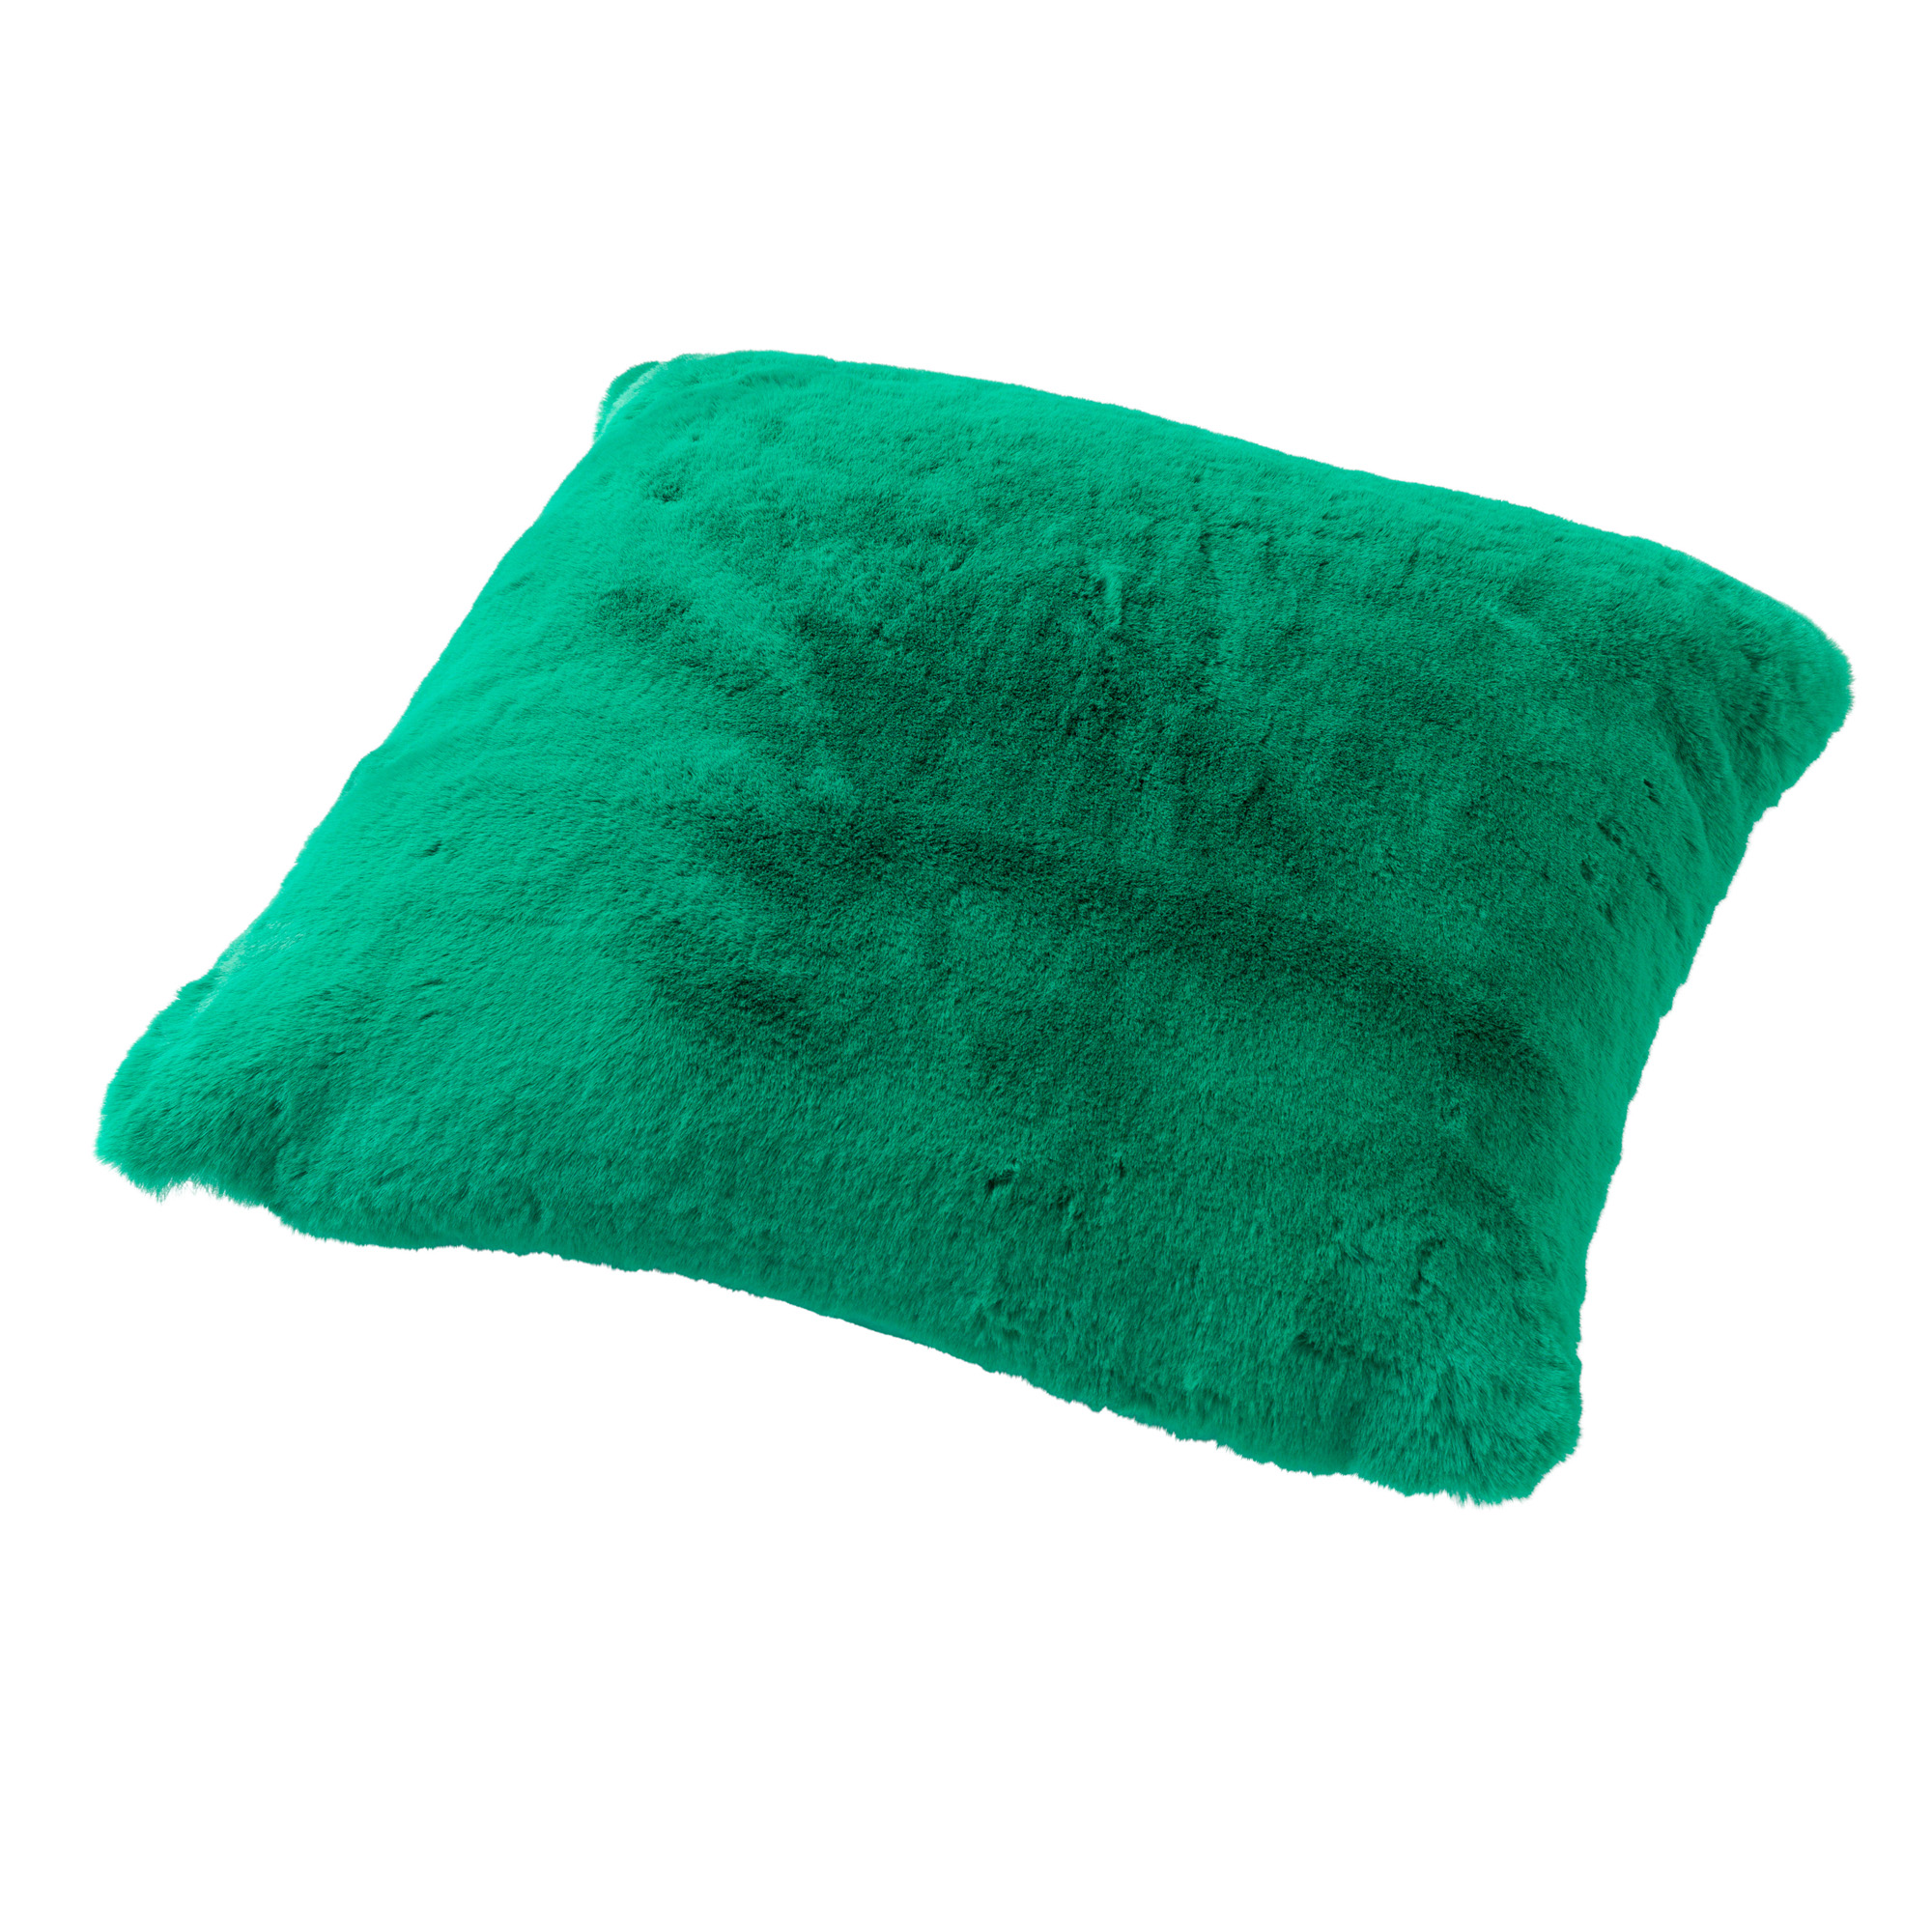 ZAYA - Kussenhoes unikleur 45x45 cm - Emerald - groen - superzacht